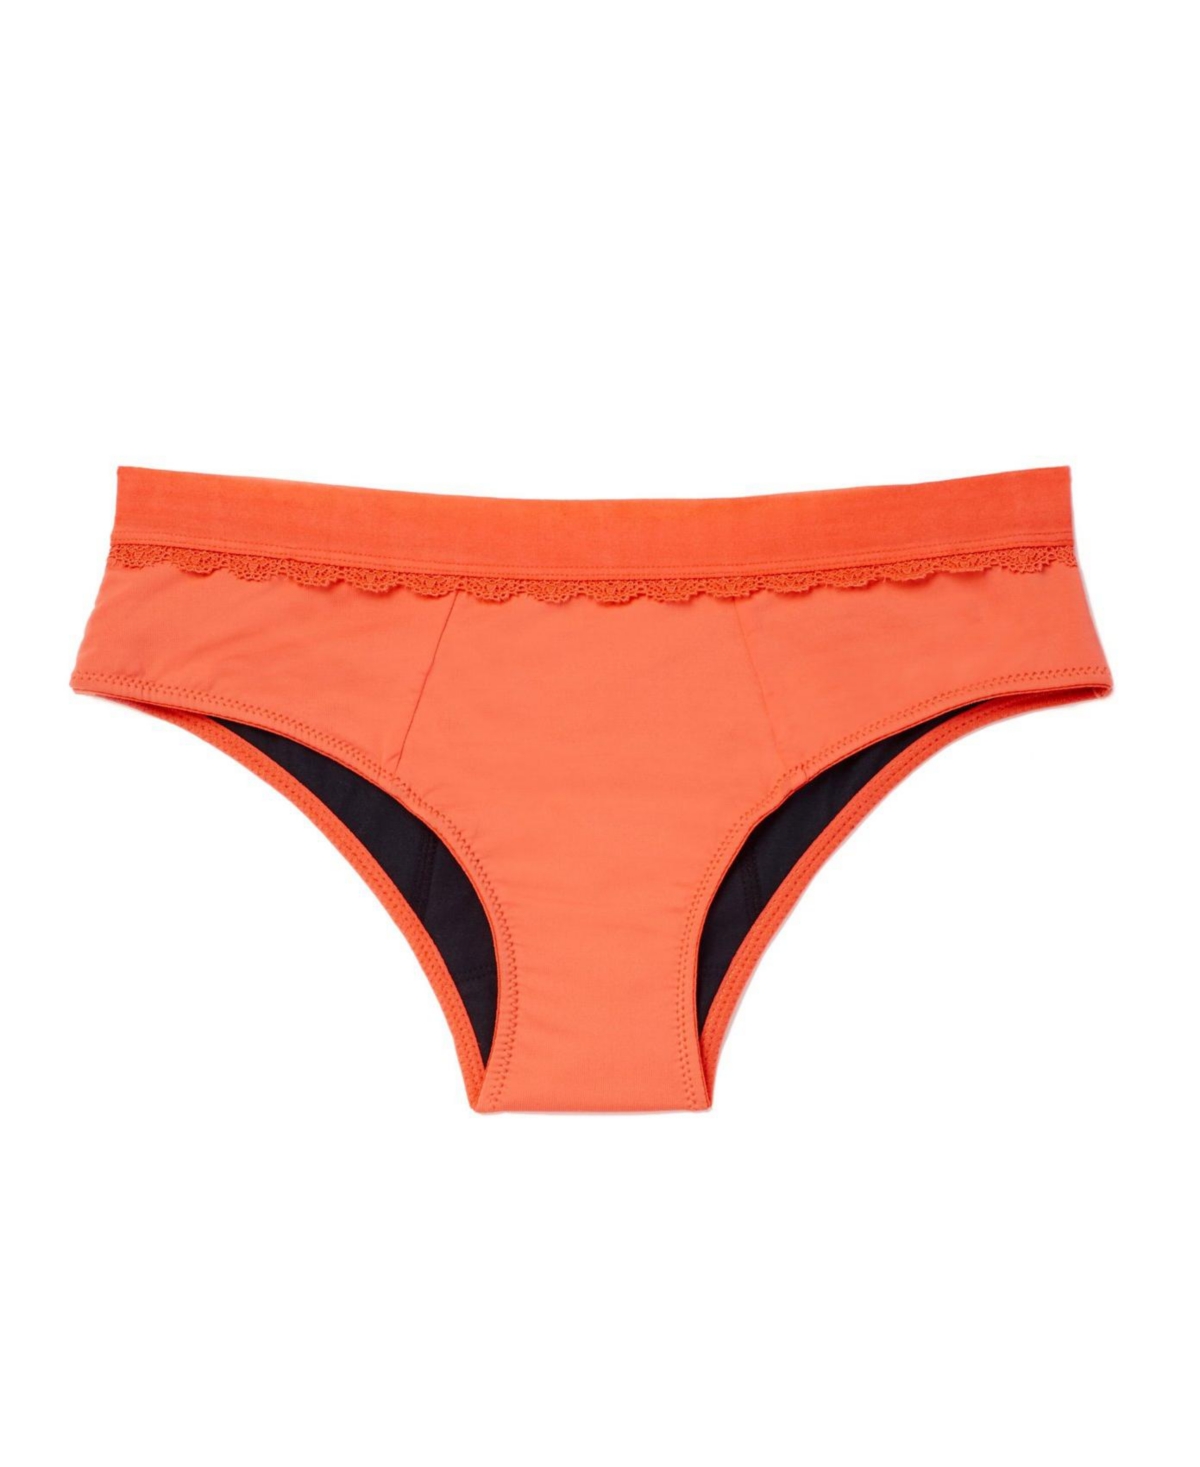 Cindy Women's Cheeky Period-Proof Panty - Medium orange